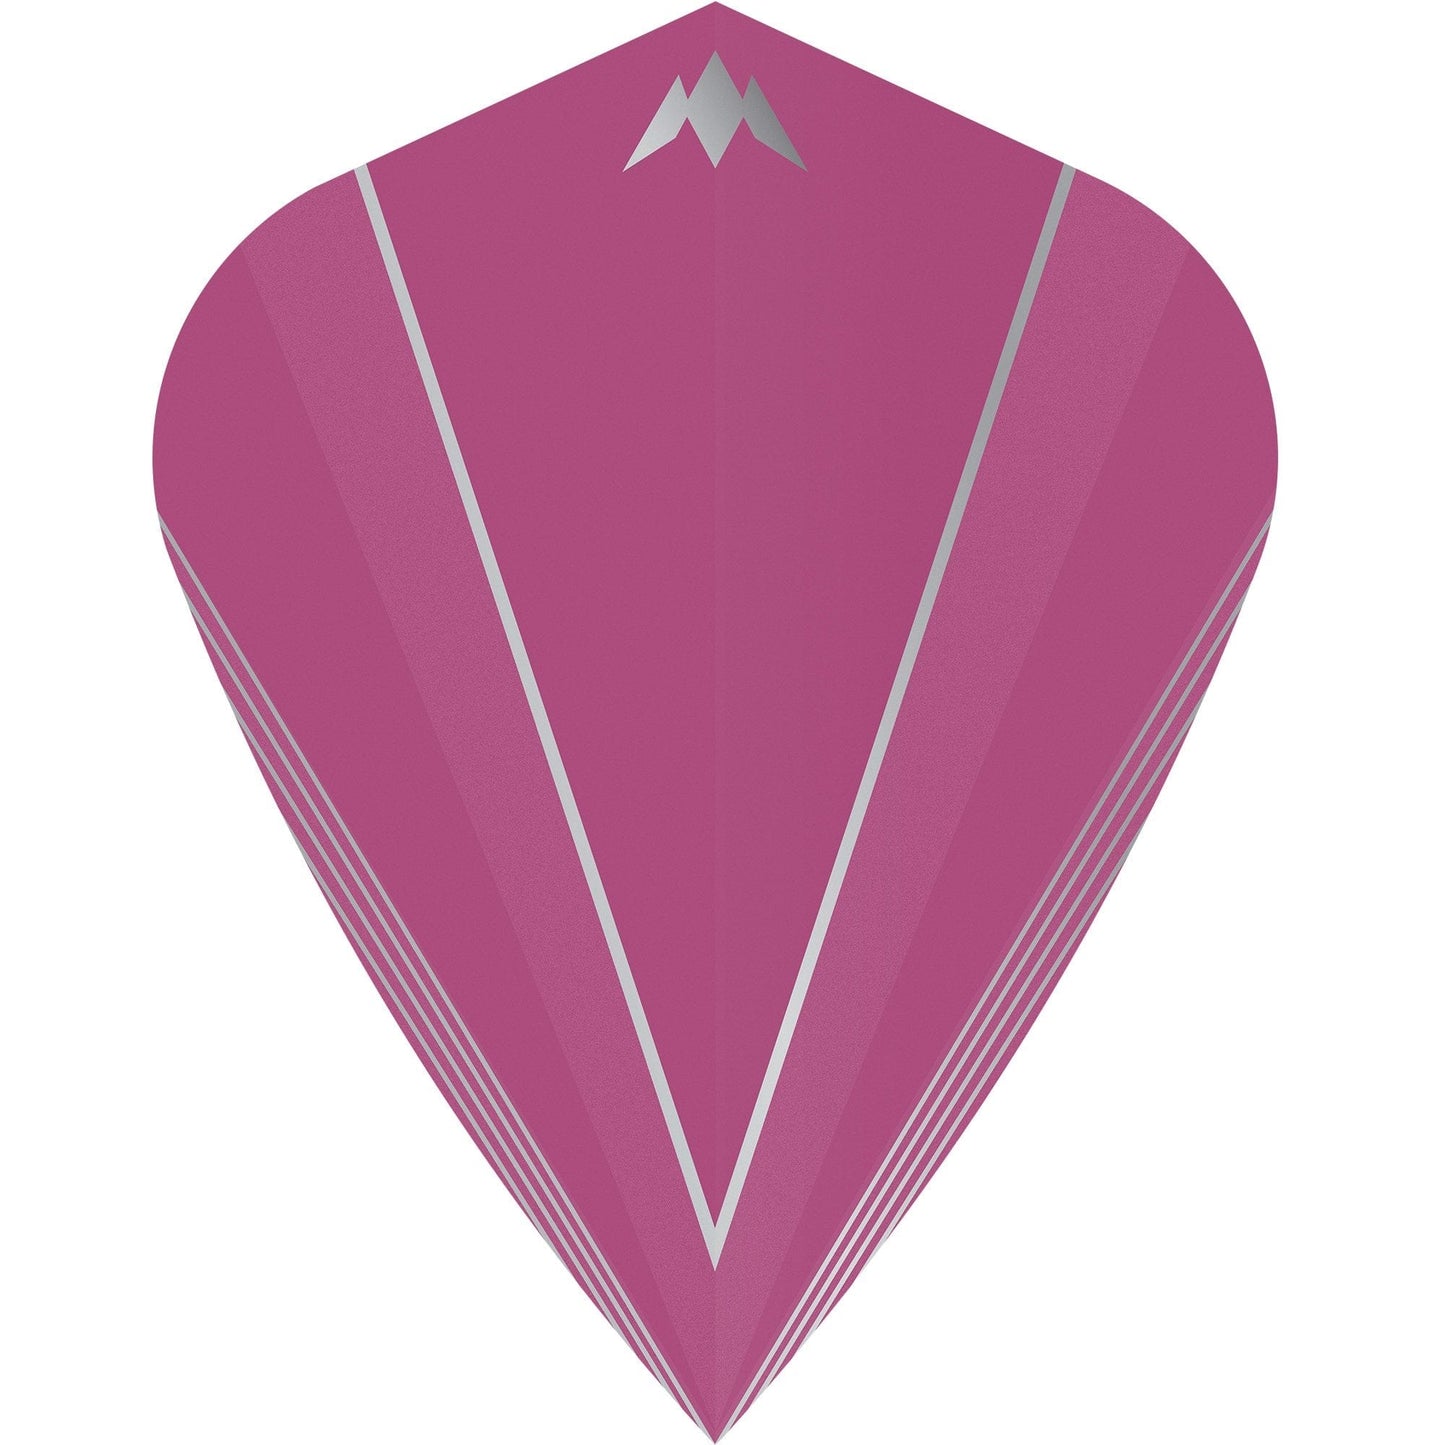 Mission Shades Dart Flights - 100 Micron - Kite Pink